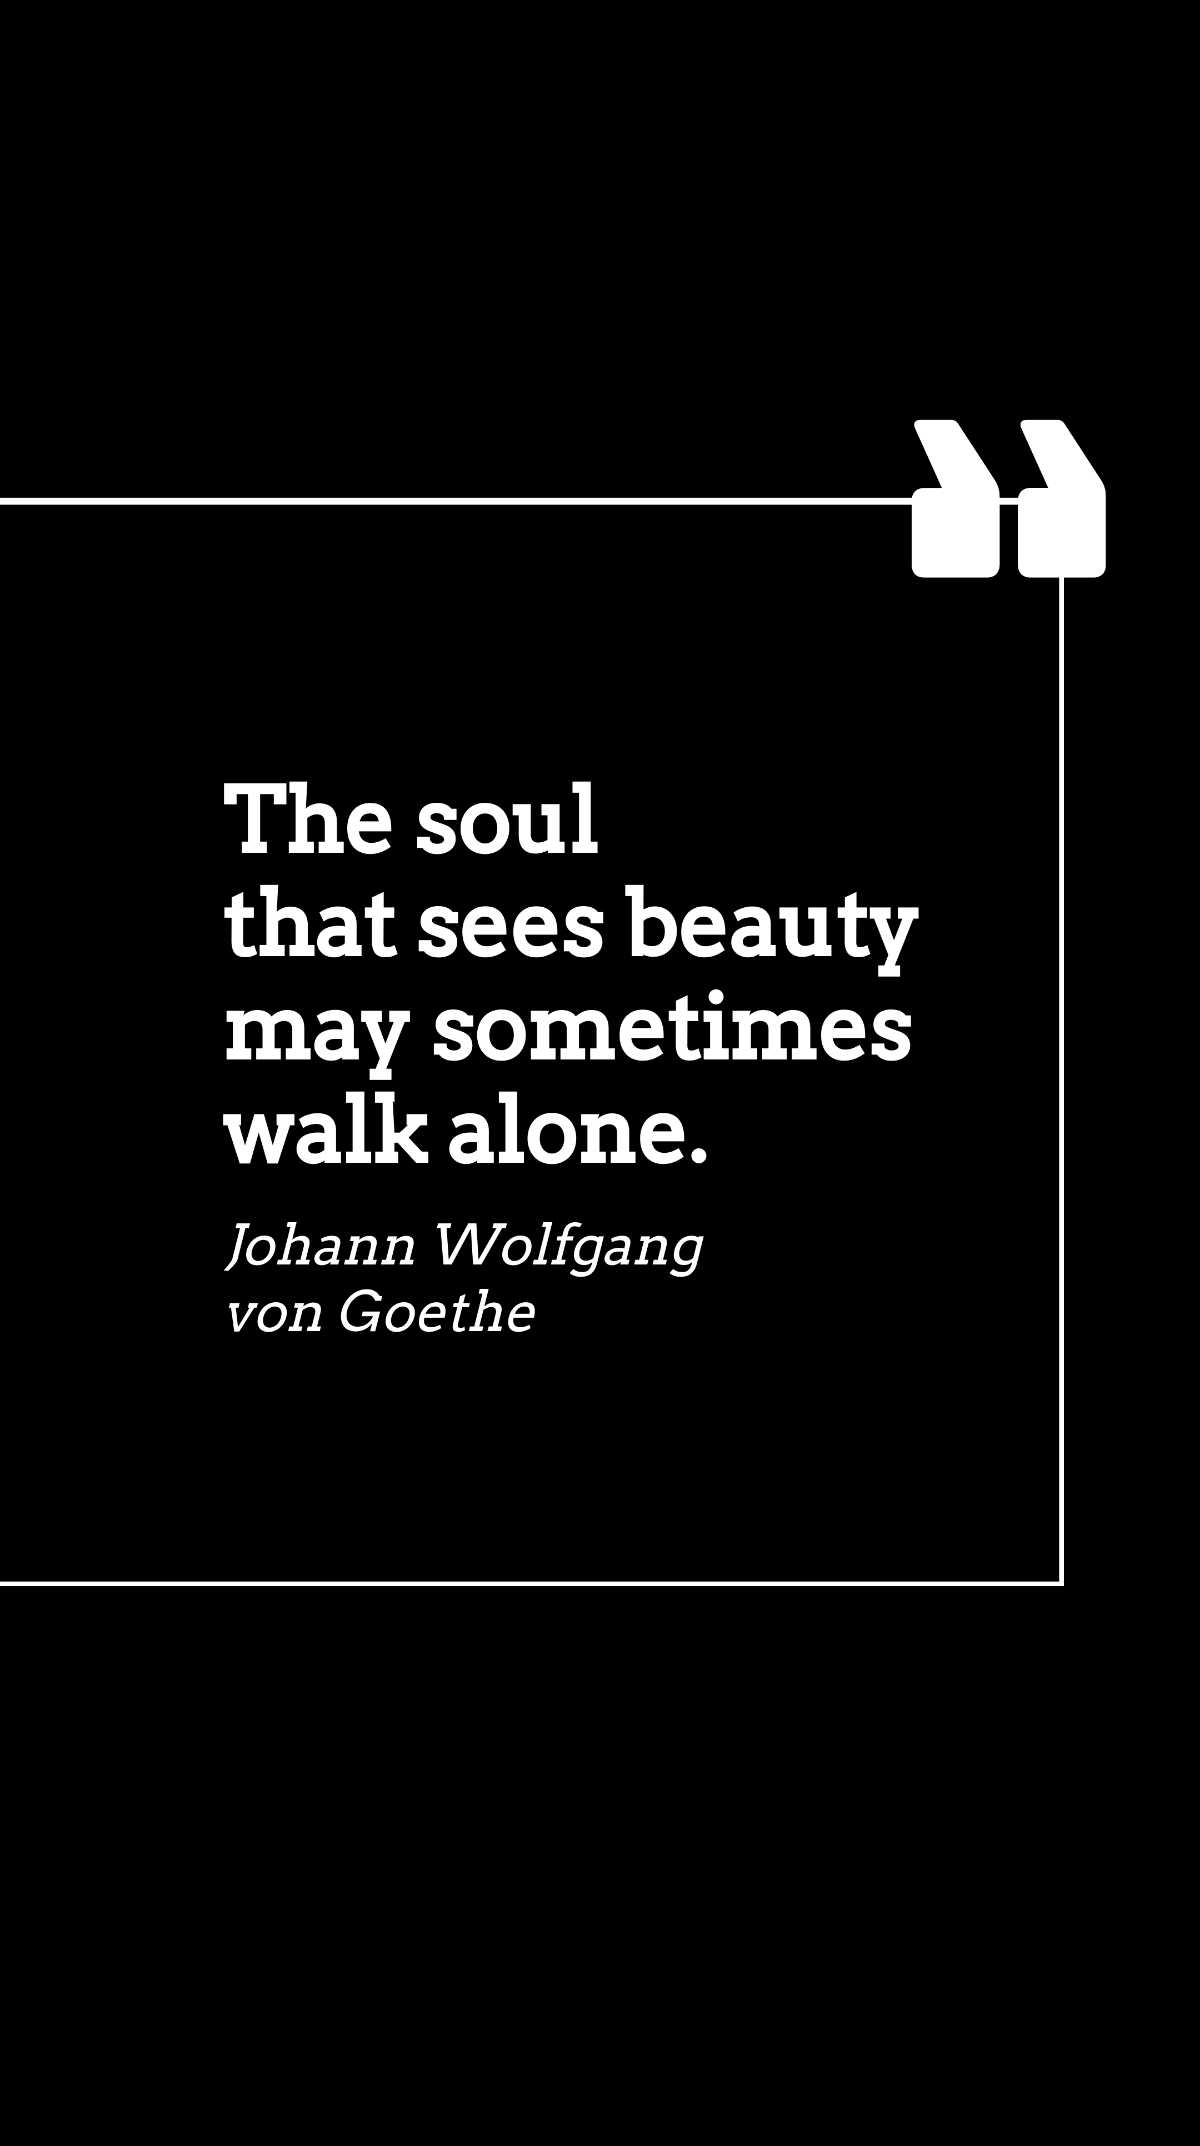 Johann Wolfgang von Goethe - The soul that sees beauty may sometimes walk alone.